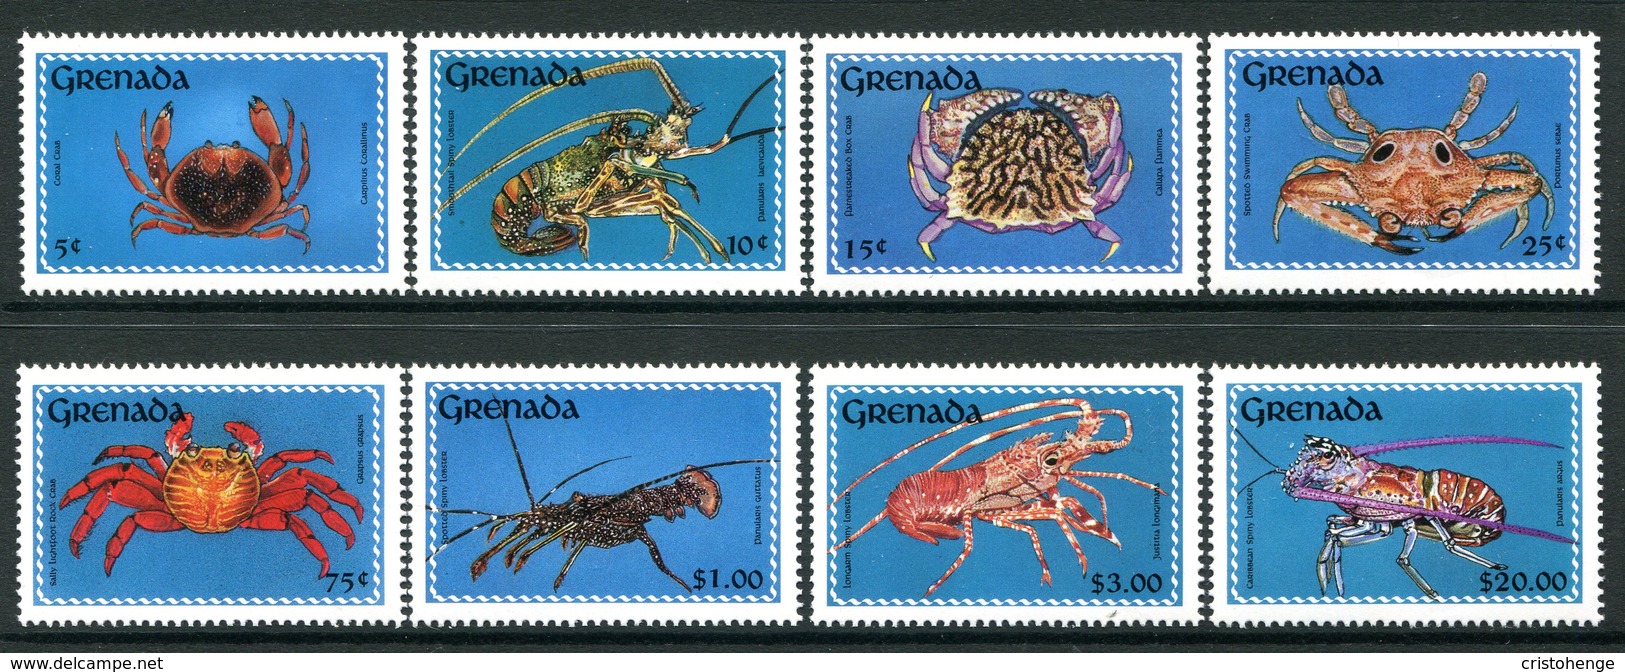 Grenada 1990 Crustaceans Set MNH (SG 2165-2172) - Grenada (1974-...)